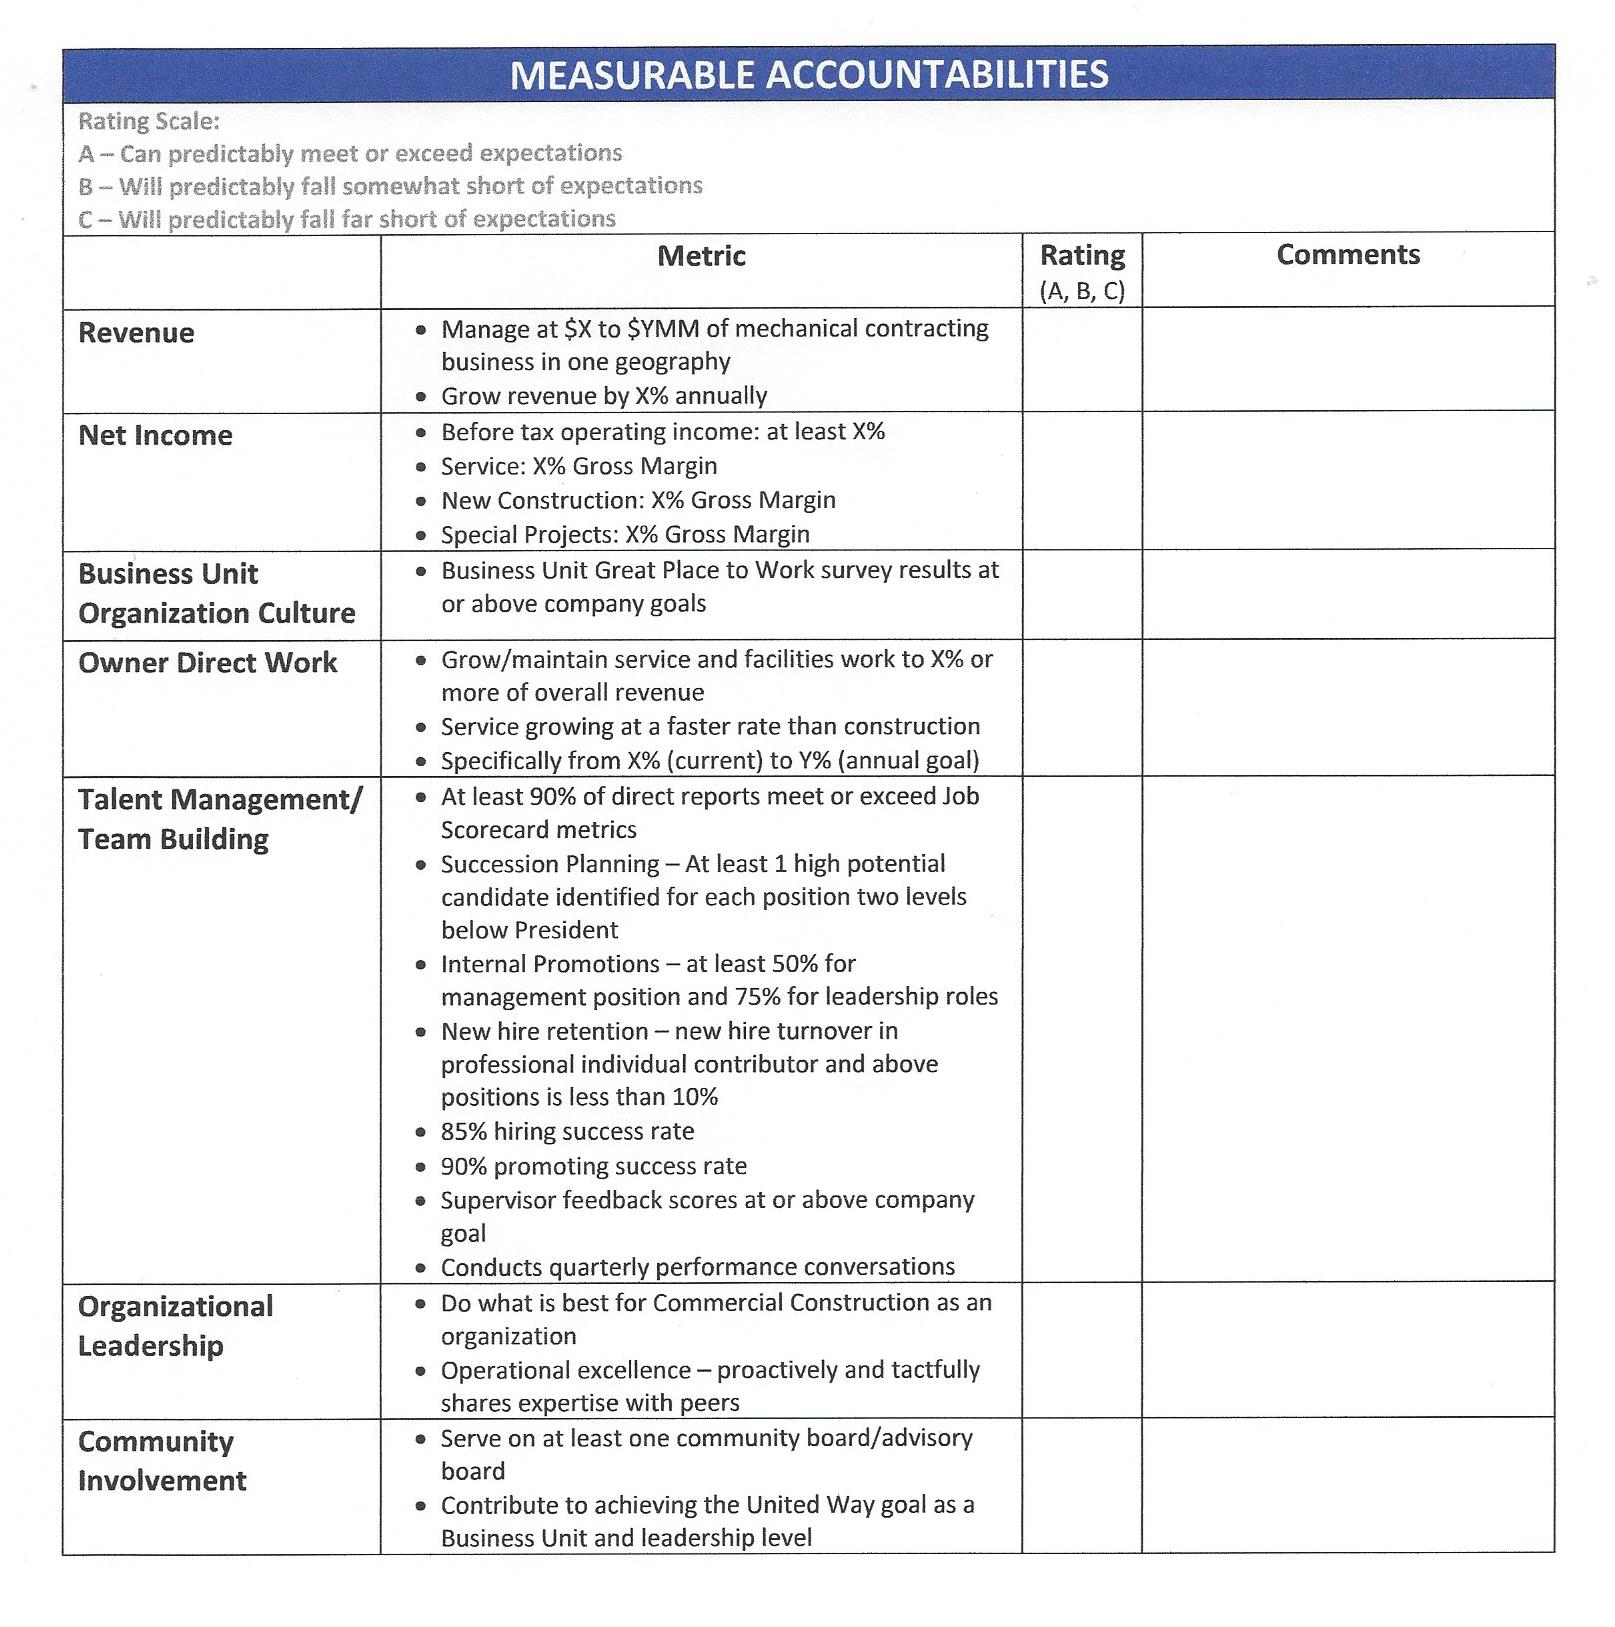 Job Summary Scorecard - Measurable Accountabilities